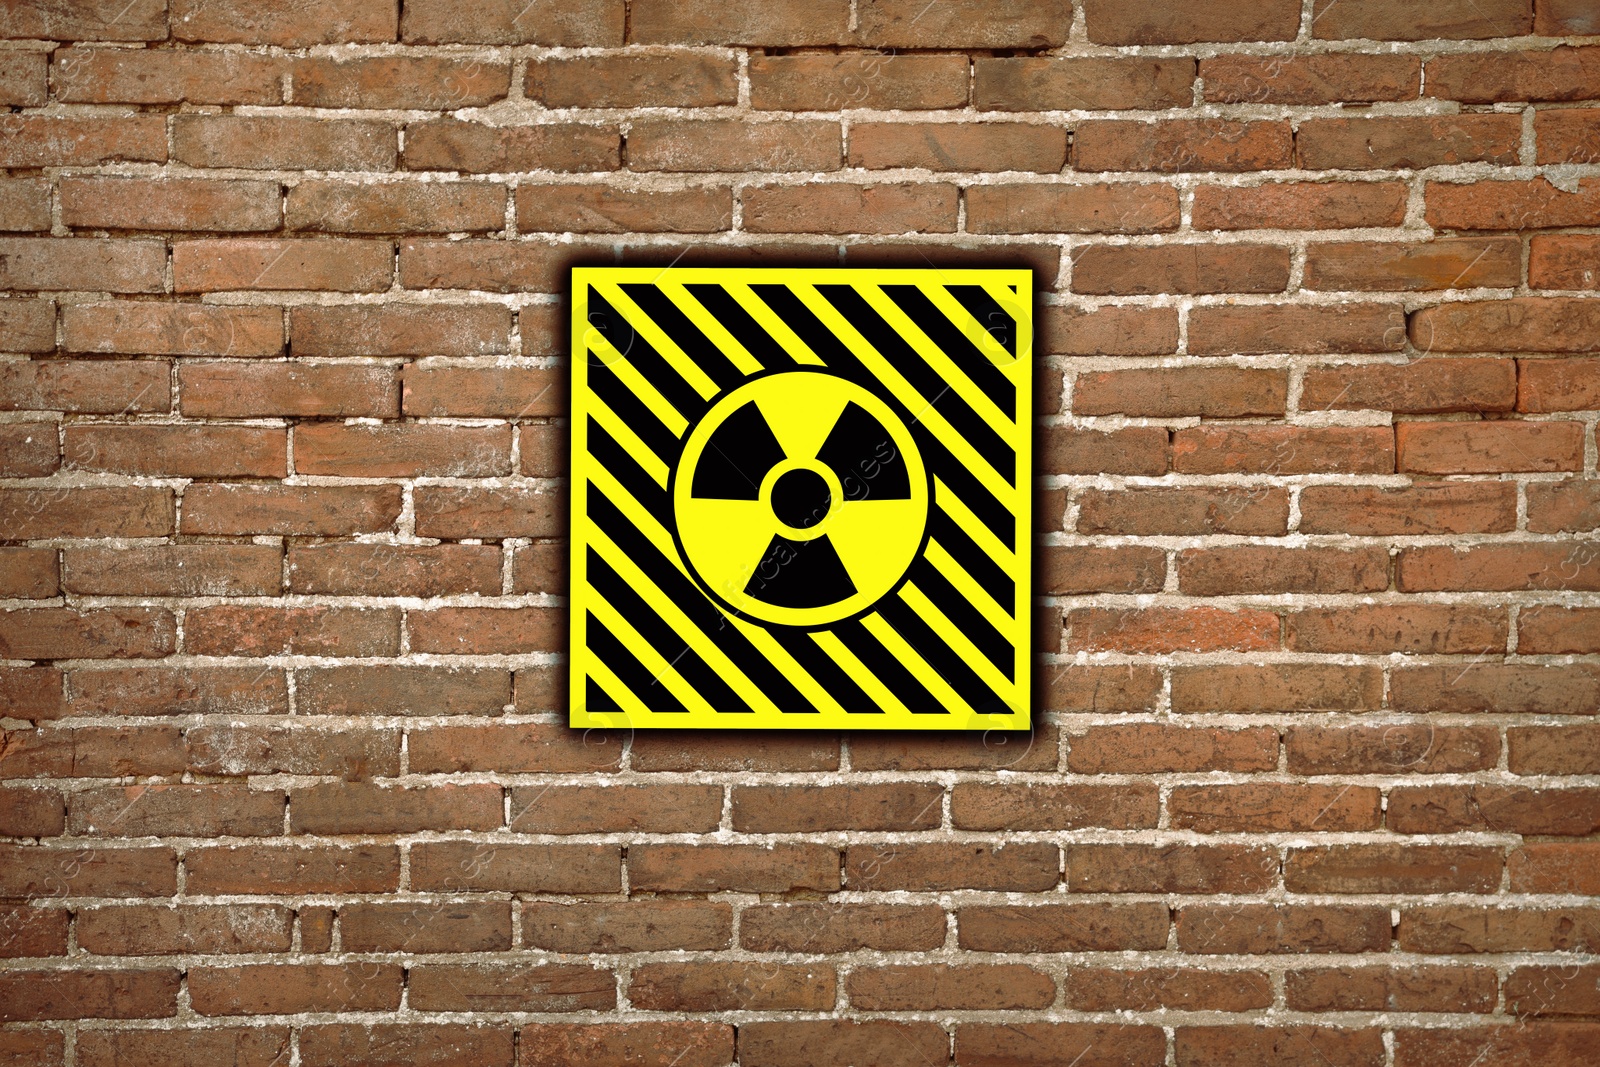 Image of Radioactive sign on brick wall. Hazard symbol